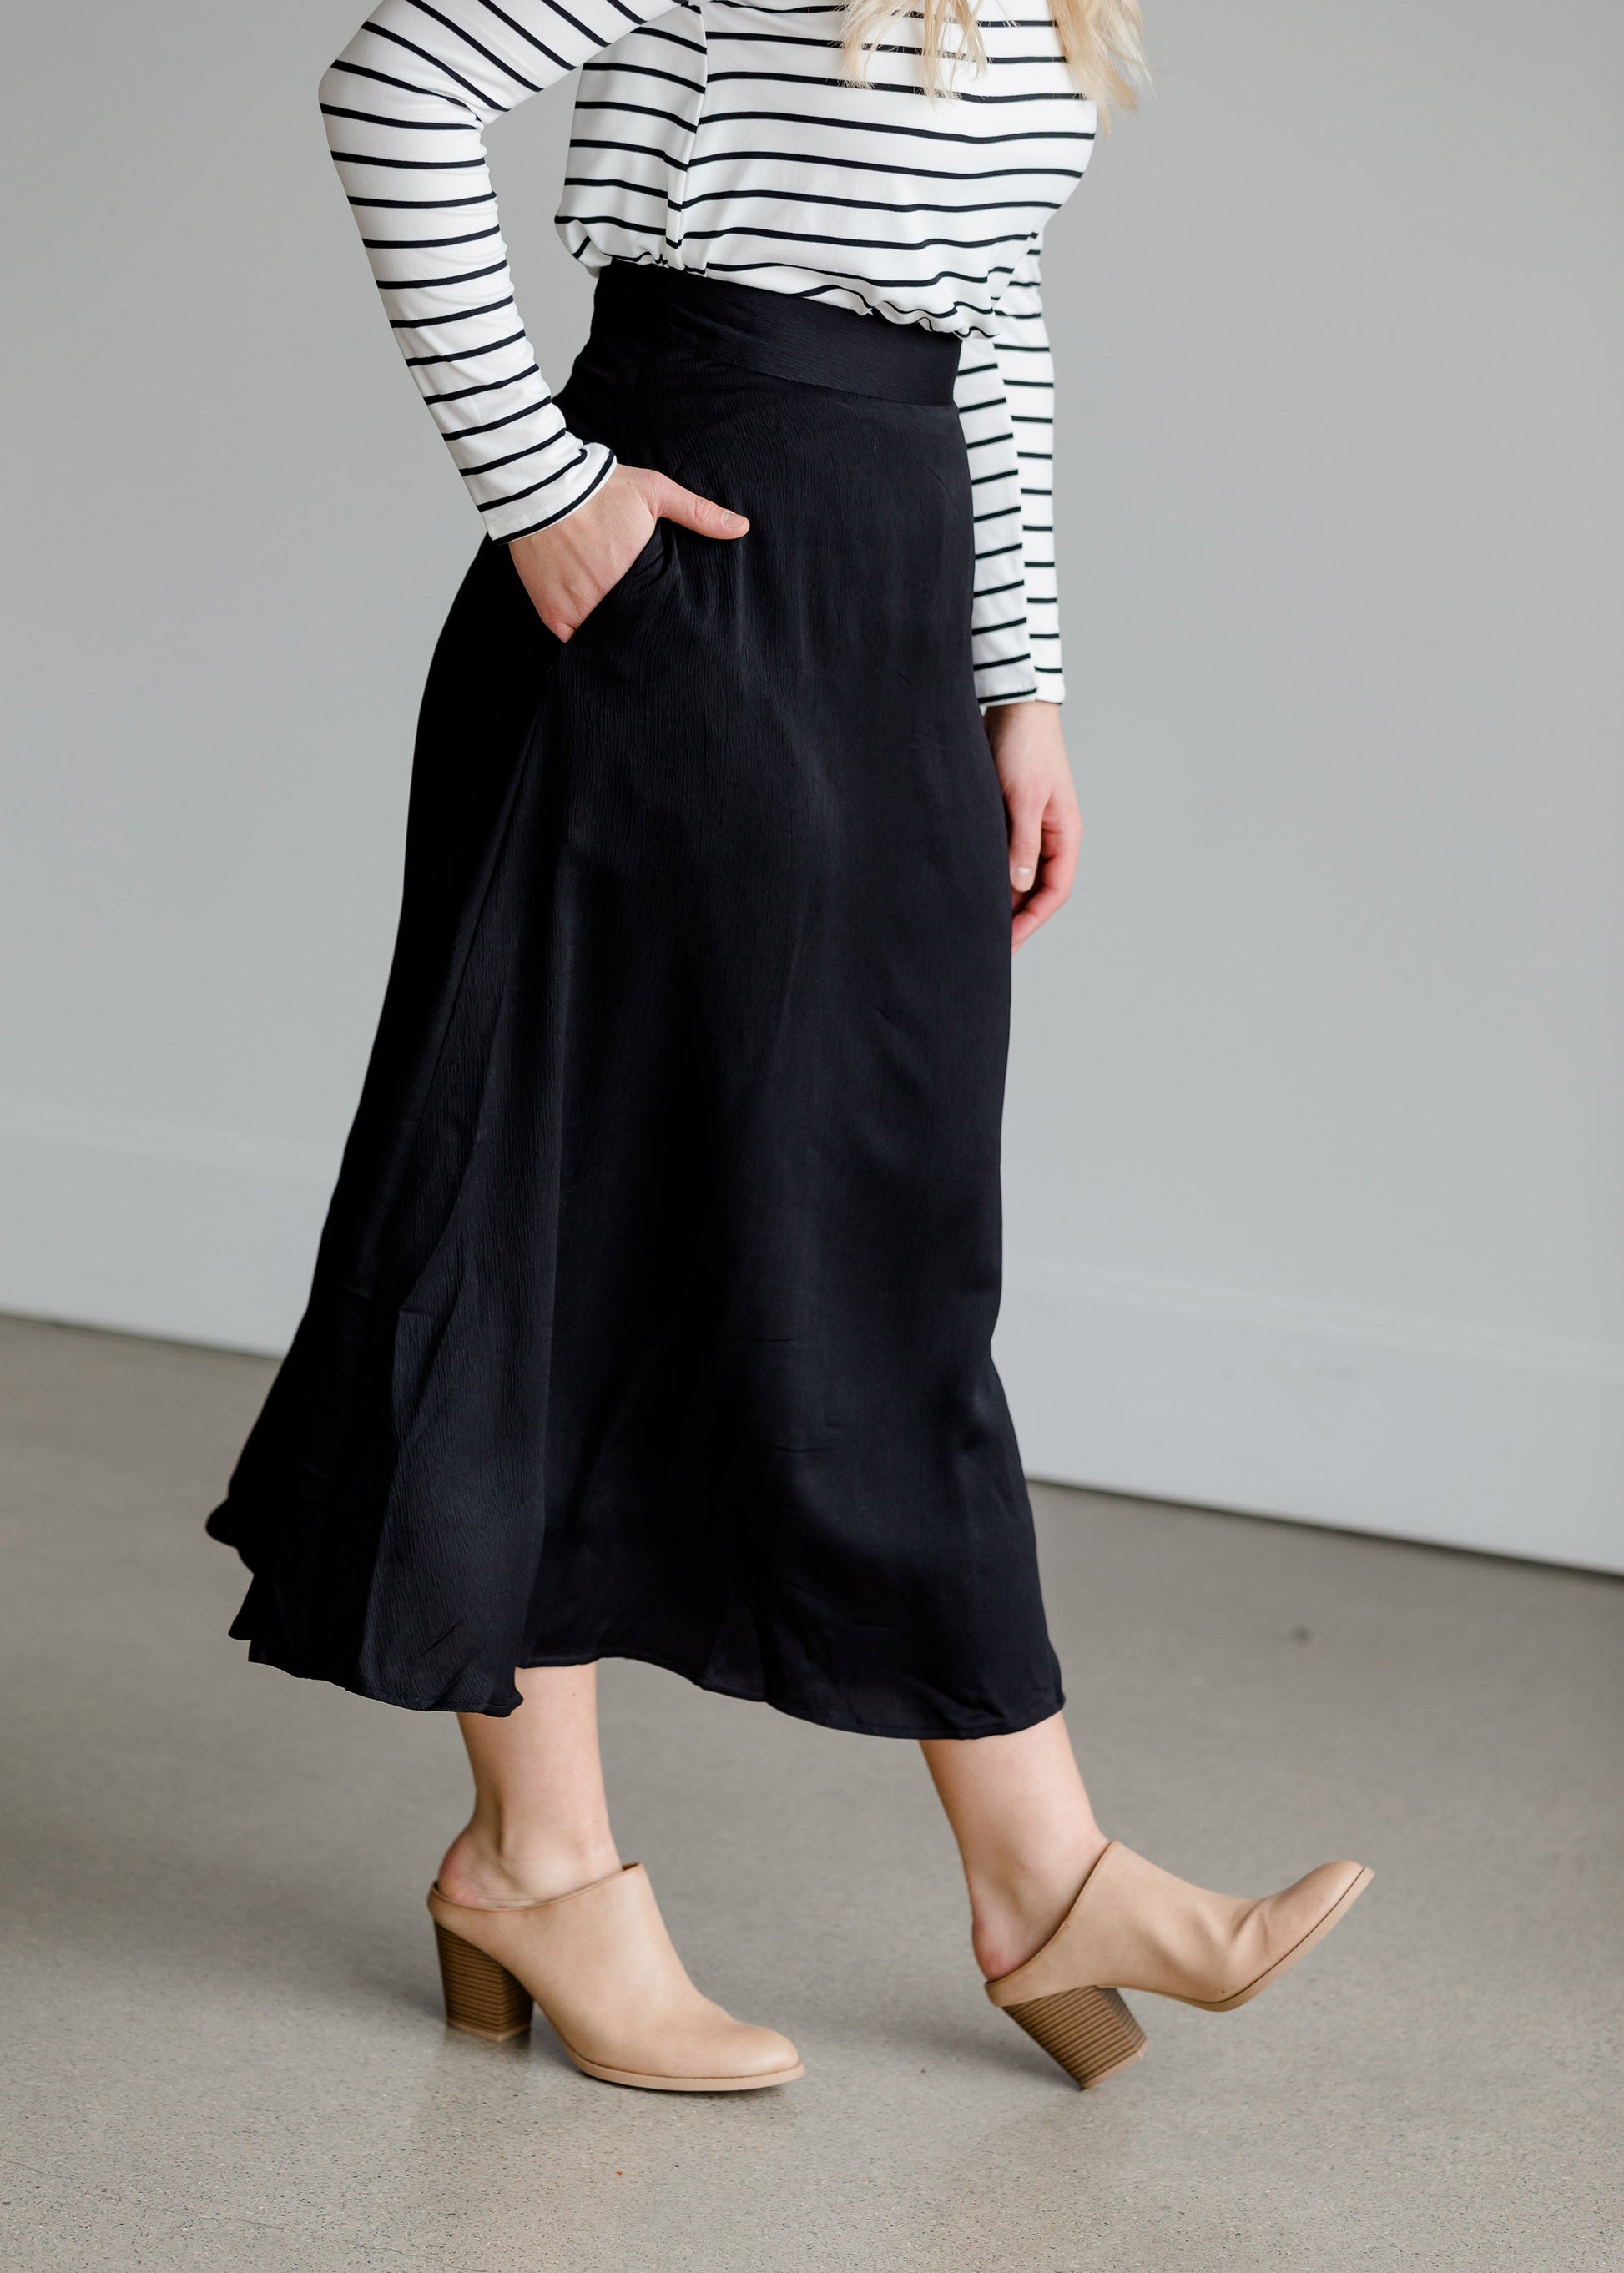 Woven A-Line Black Midi Skirt - FINAL SALE FF Skirts